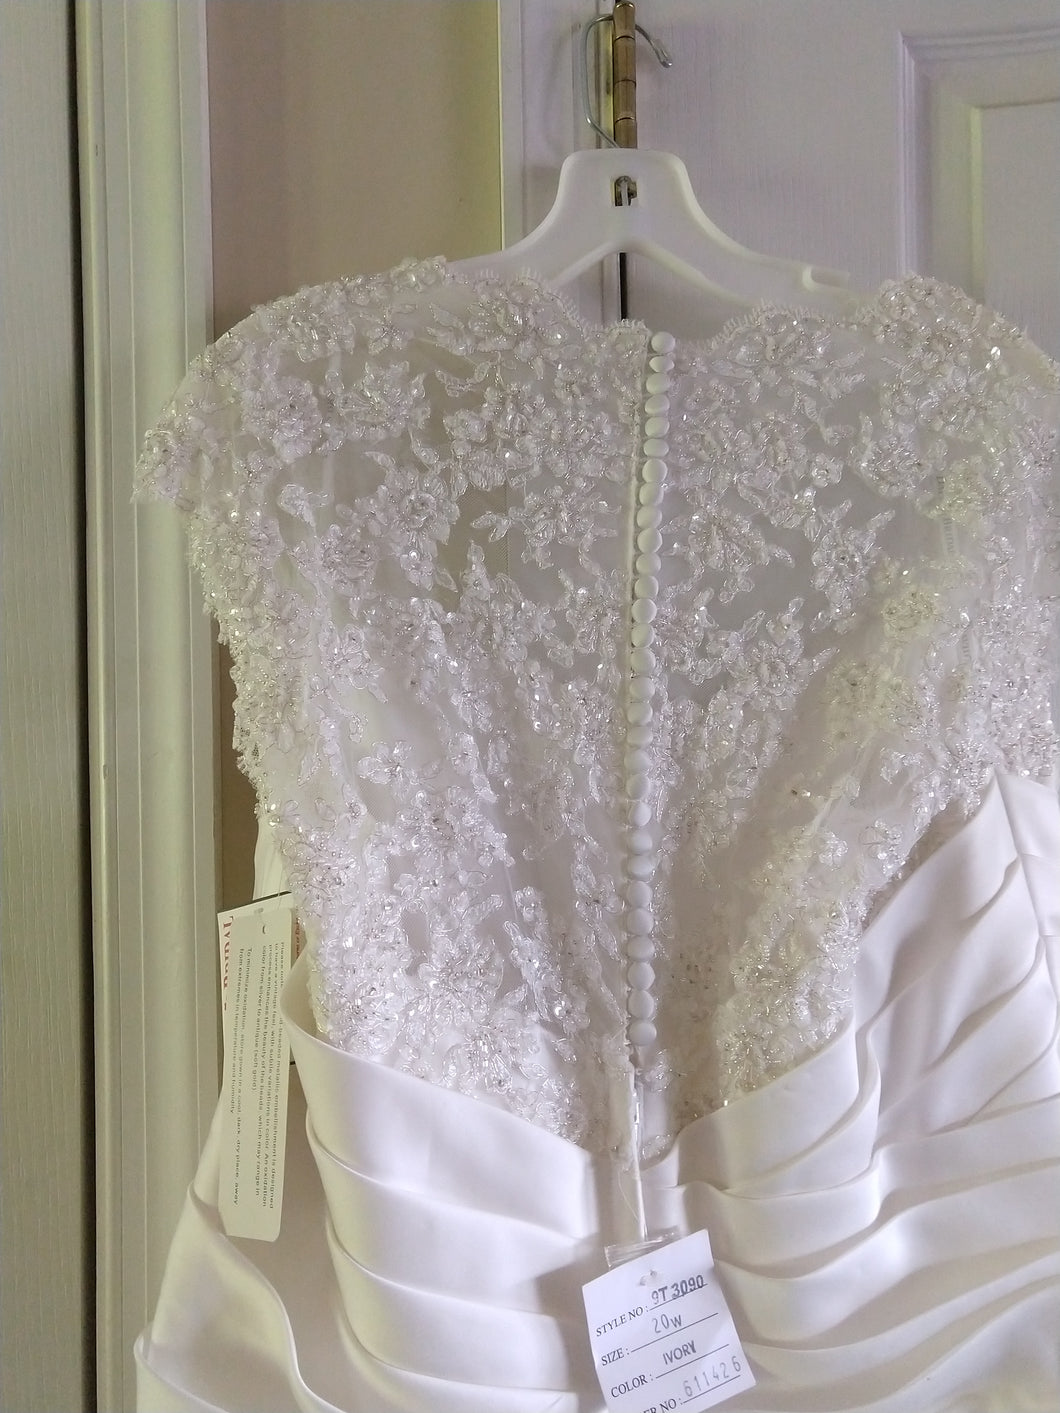 David's Bridal 'Cap Sleeve Satin' size 18 new wedding dress back view on hanger